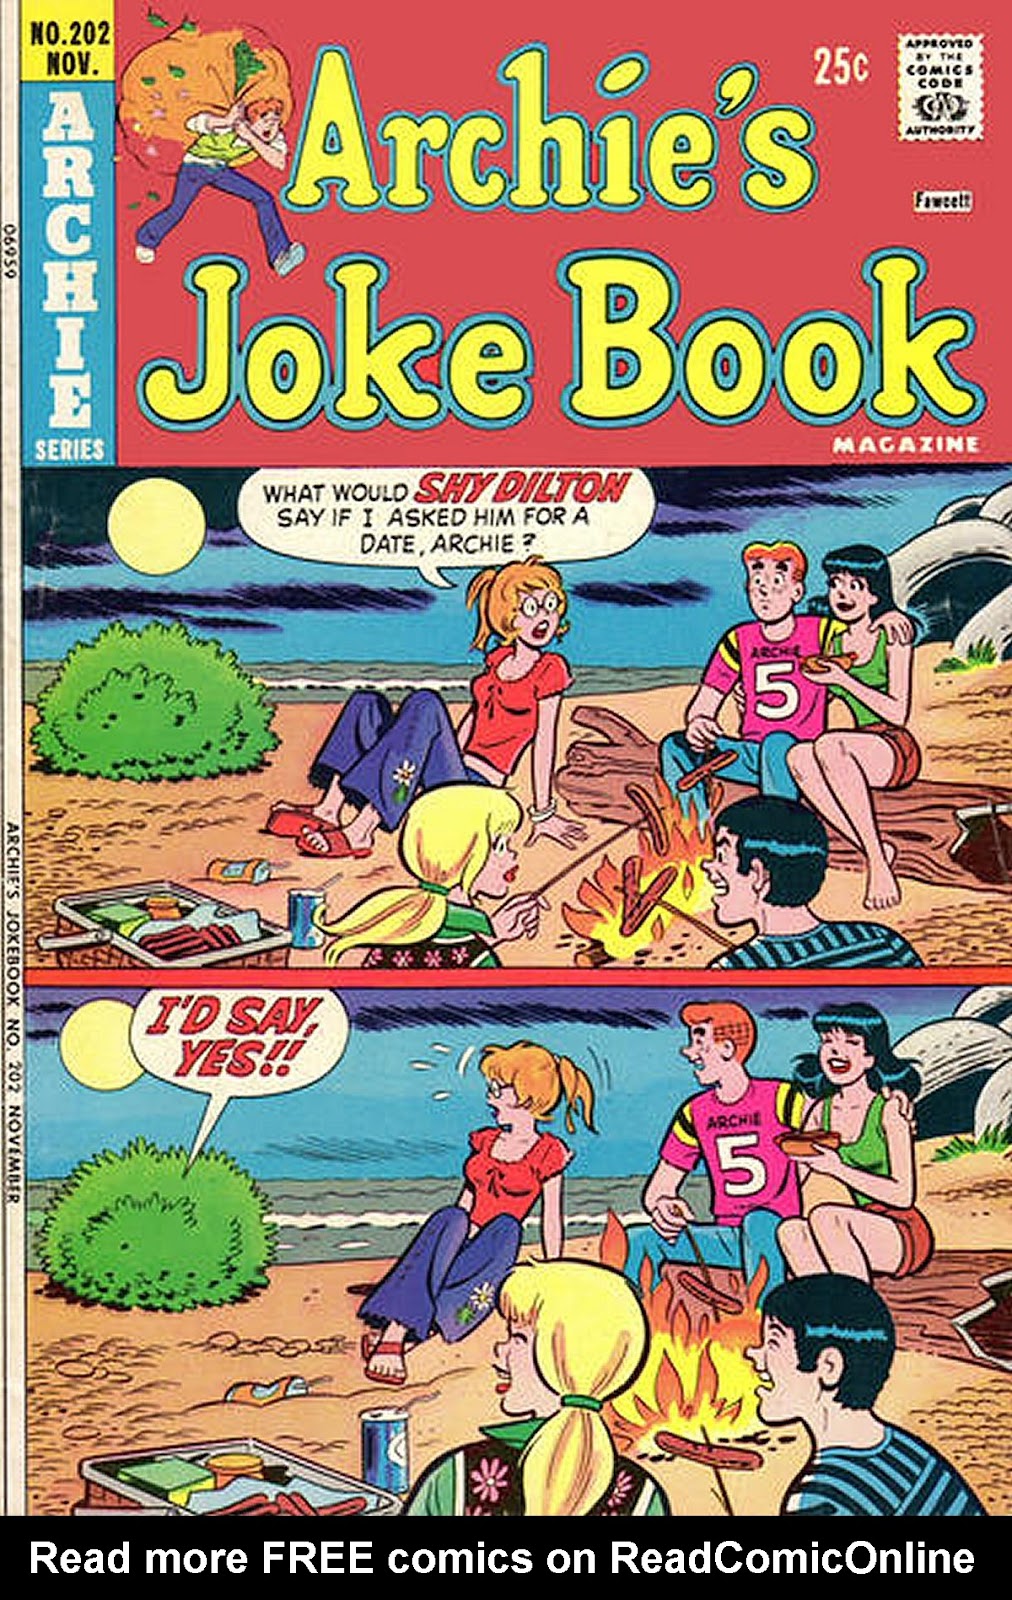 Archie's Joke Book Magazine issue 202 - Page 1